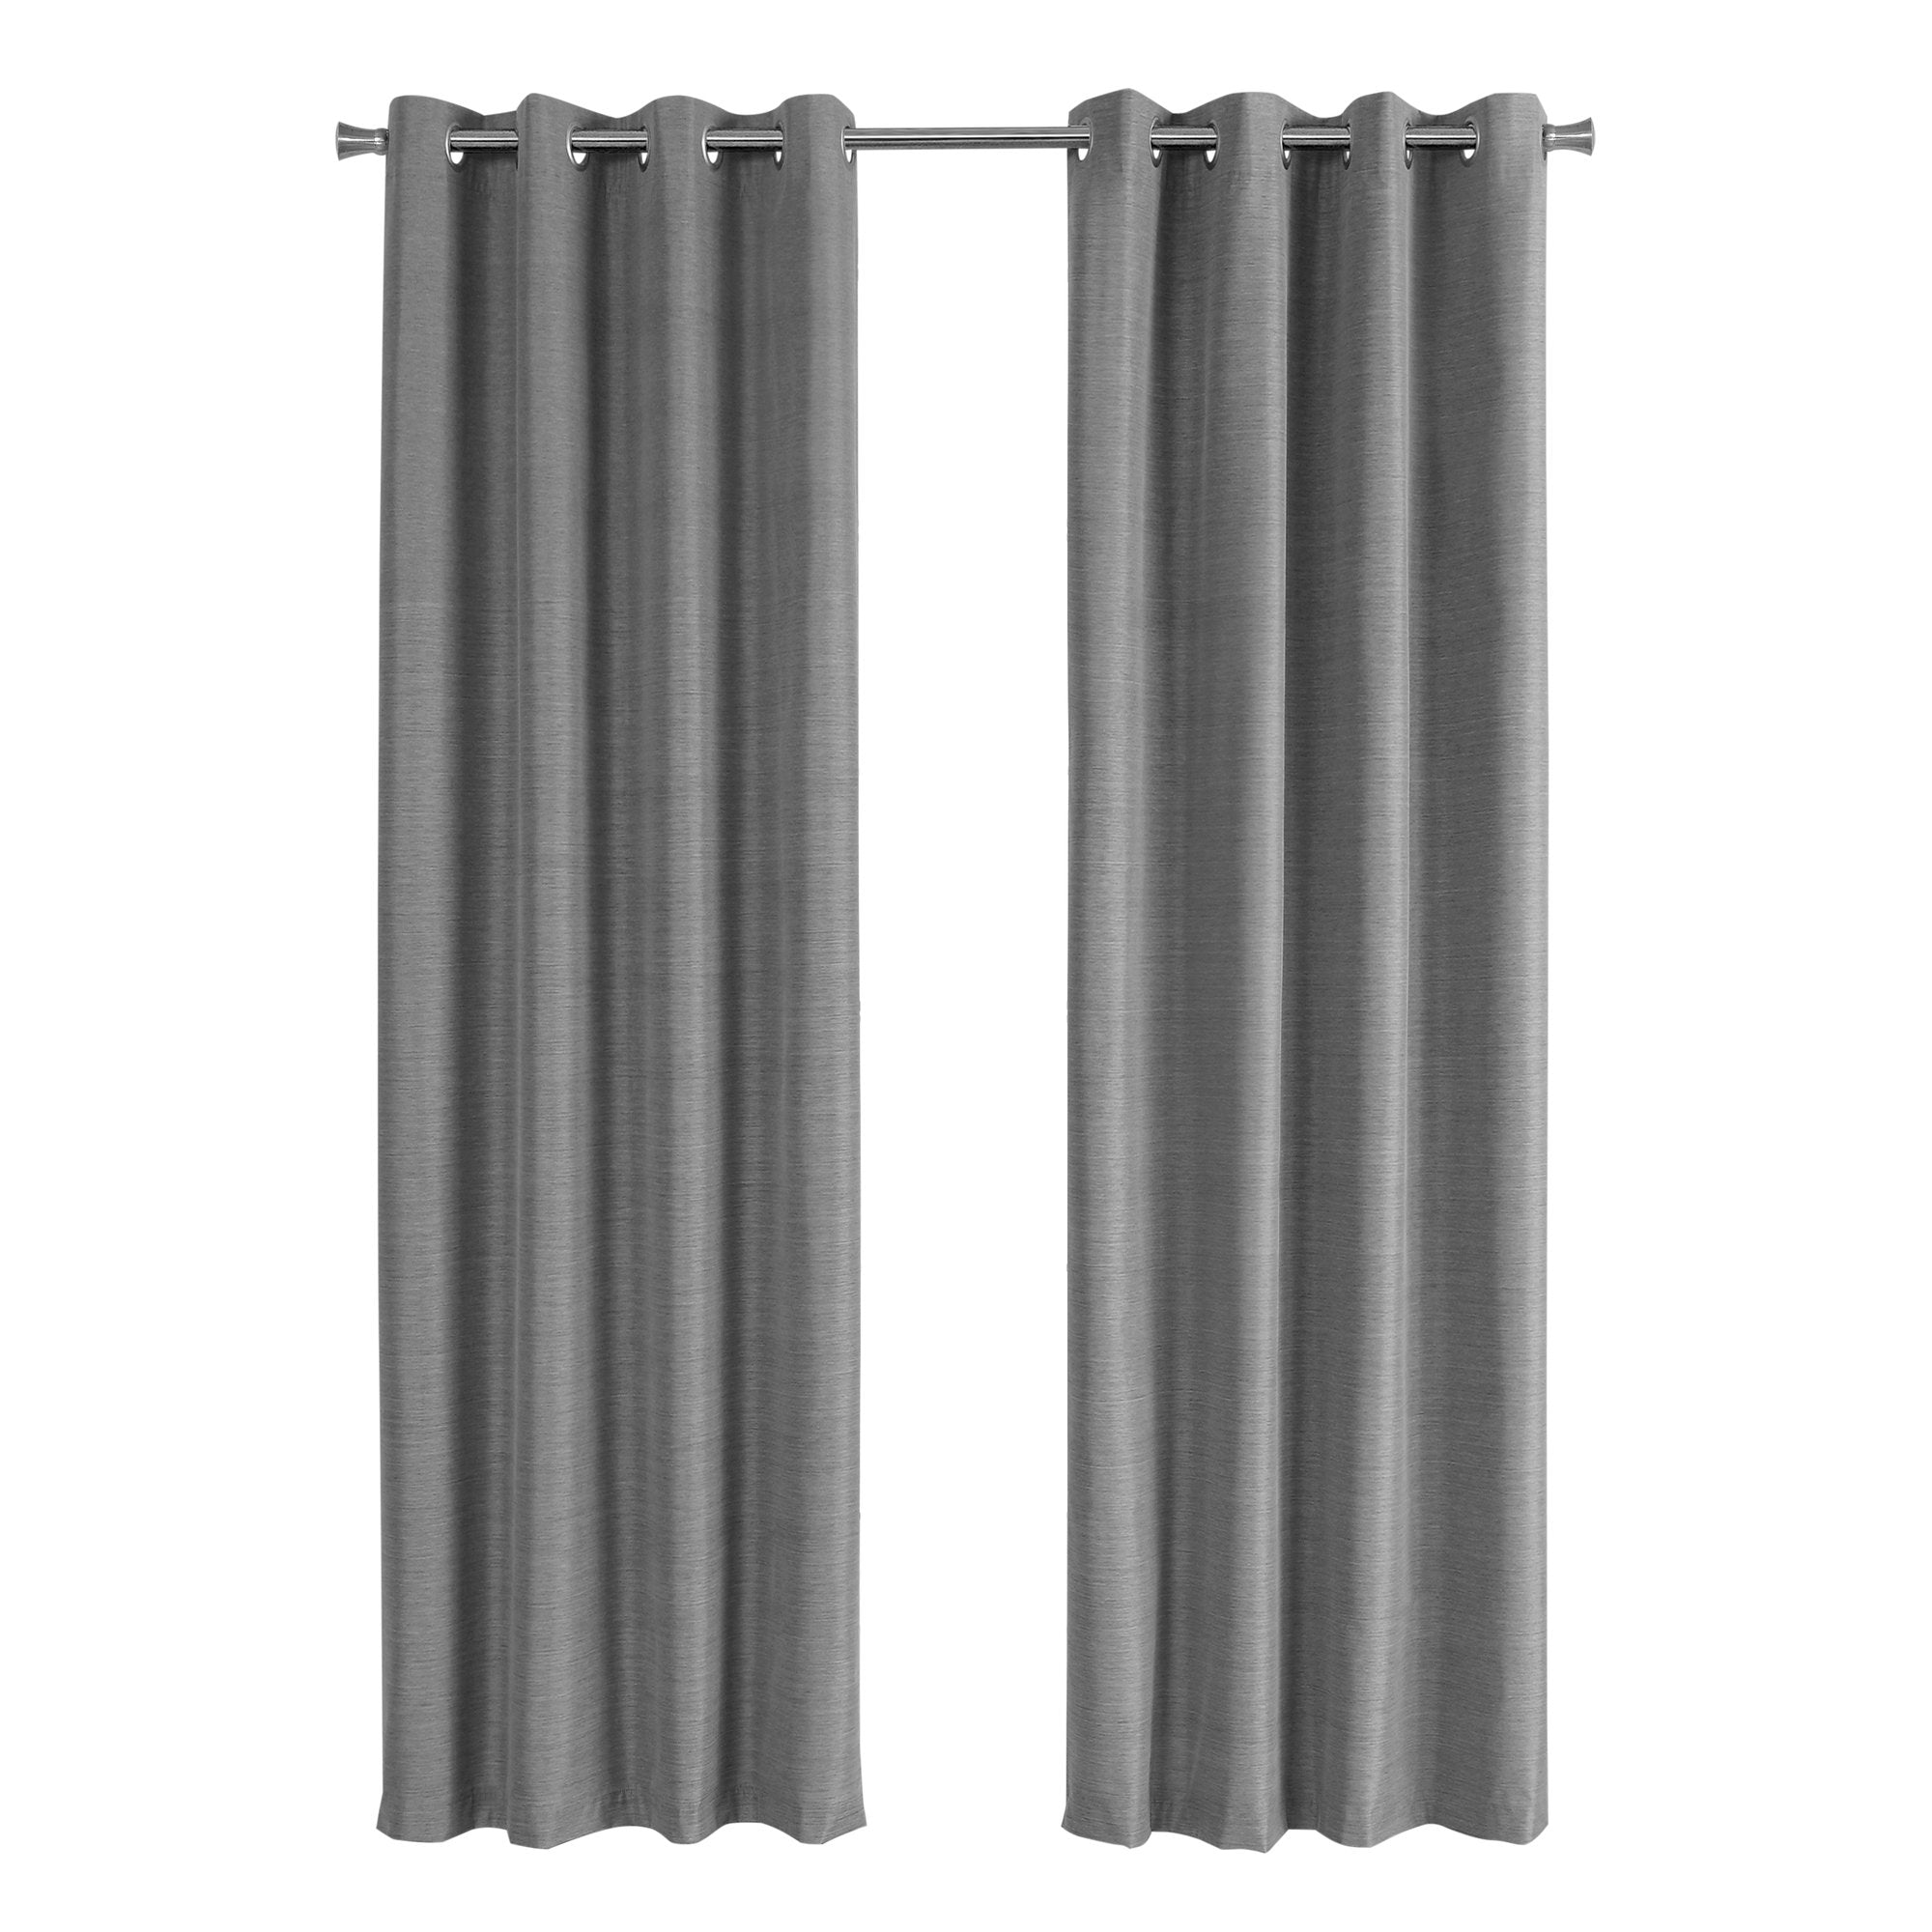 Curtain Panel - 2Pcs / 52W X 84H Grey Solid Blackout